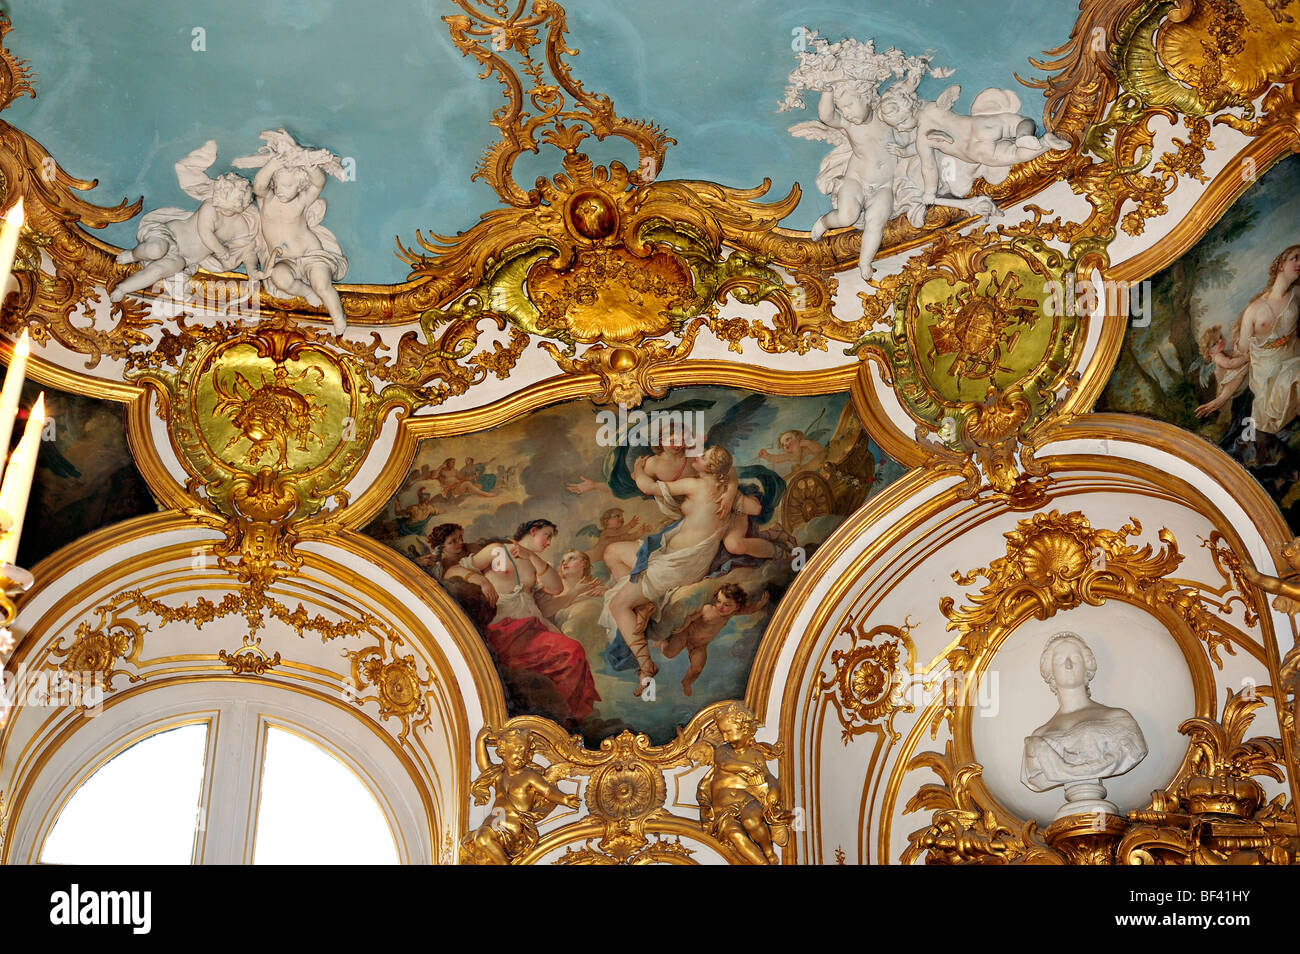 Paris, France - Inside, French History Archives Museum, Architectural Detail, Ceiling Painting "Oval Room" "Ho-tel de Soubise" parisian salon Stock Photo